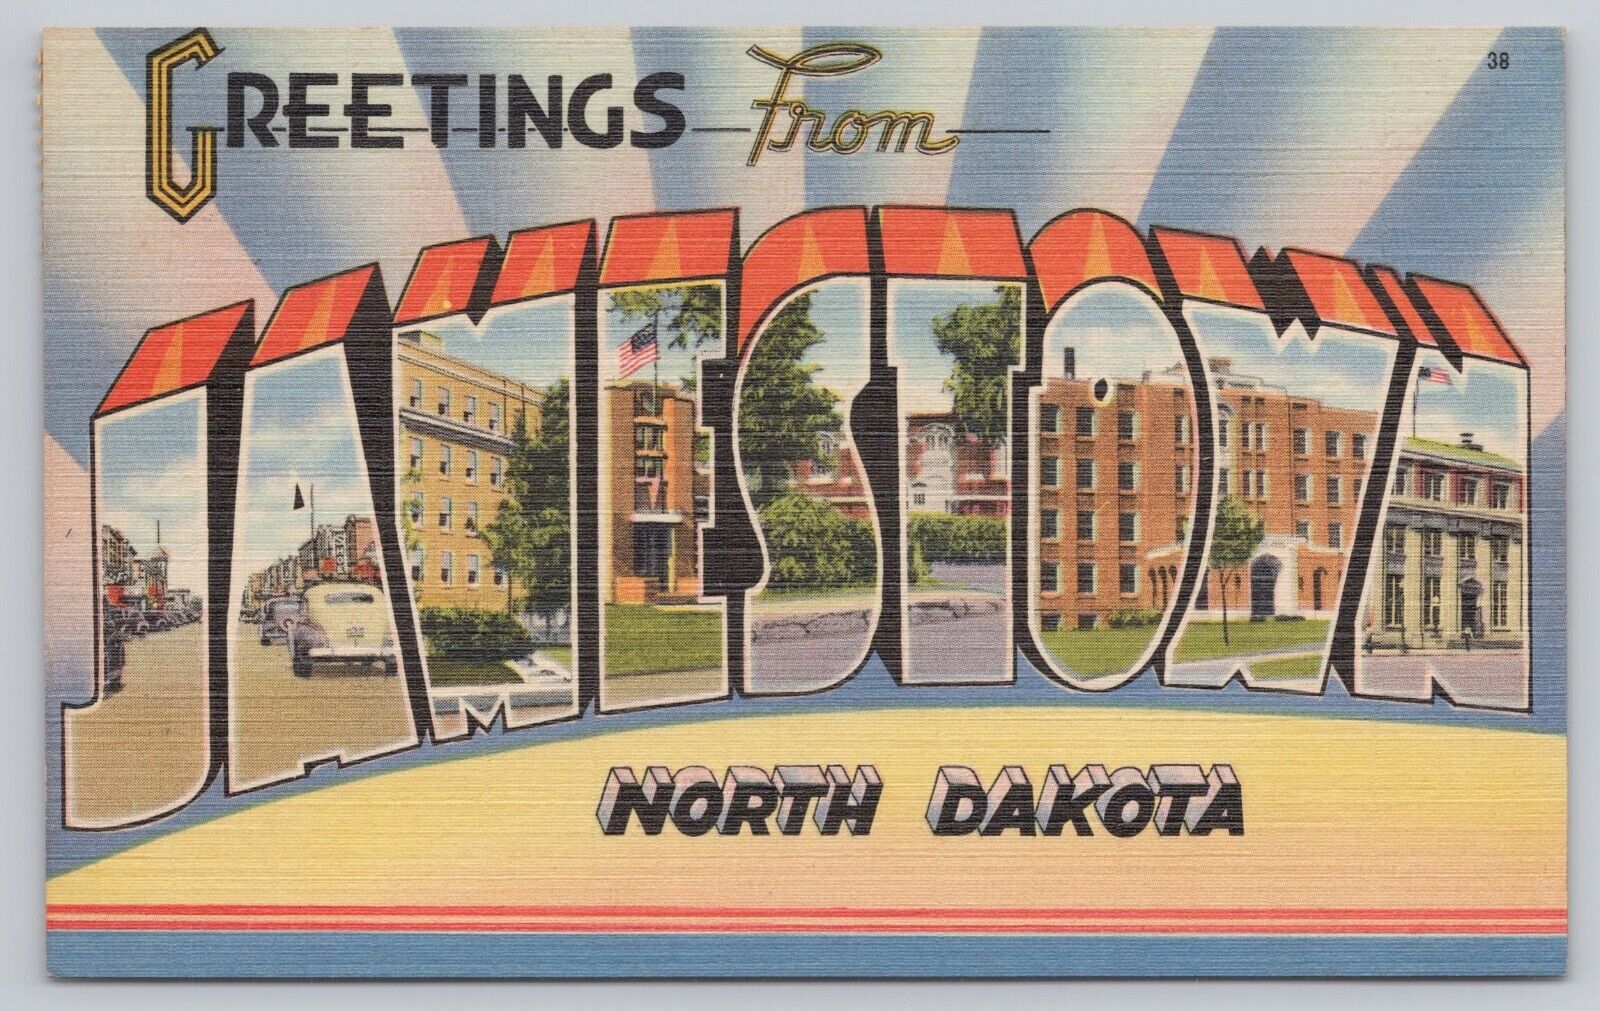 Jamestown North Dakota, Large Letter Greetings, Vintage Postcard